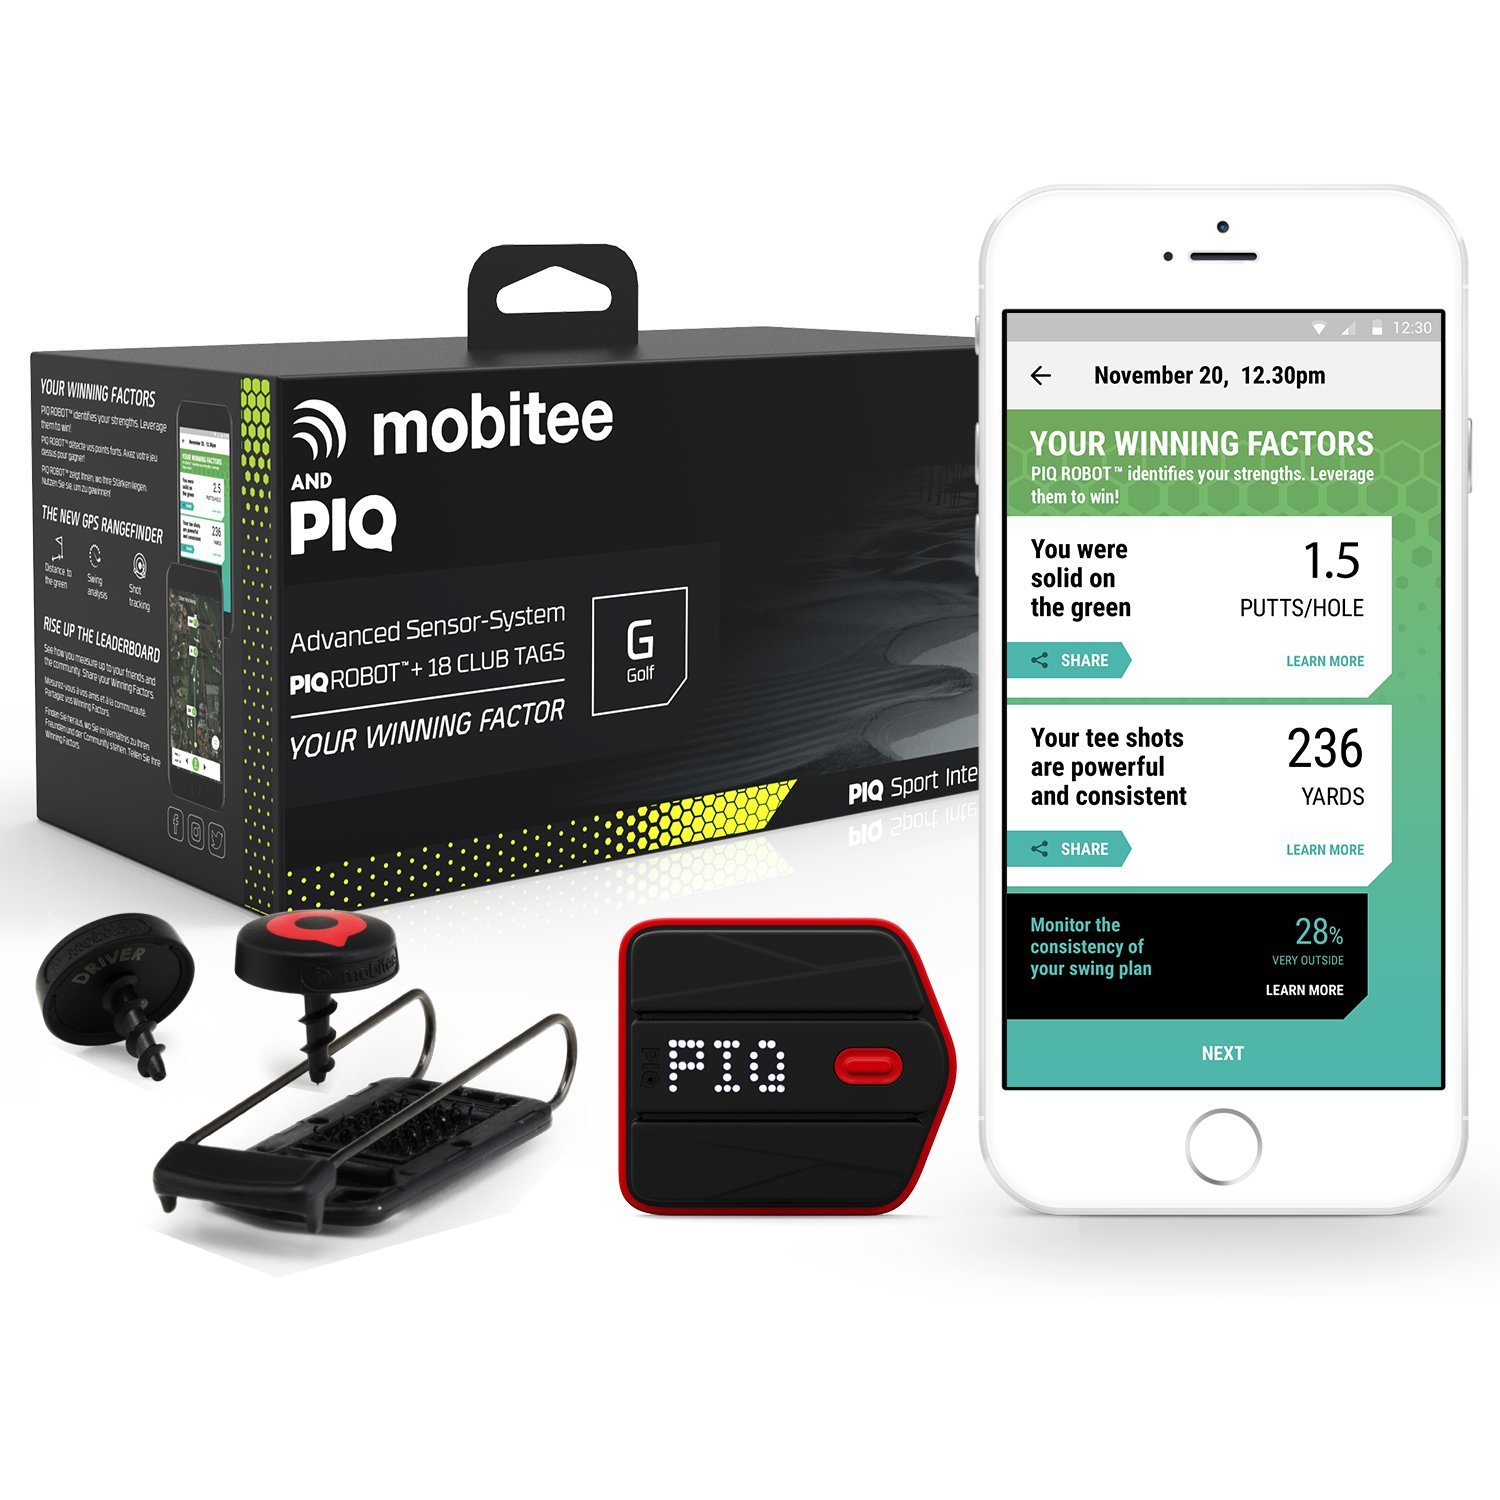 Mobitee & PIQ Wearable Golf Sport Tracker - Golf Course GPS Rangefinder on your wrist, Club GPS Shot Tracker, Club Shot Statistics, Golf Swing Ana 2